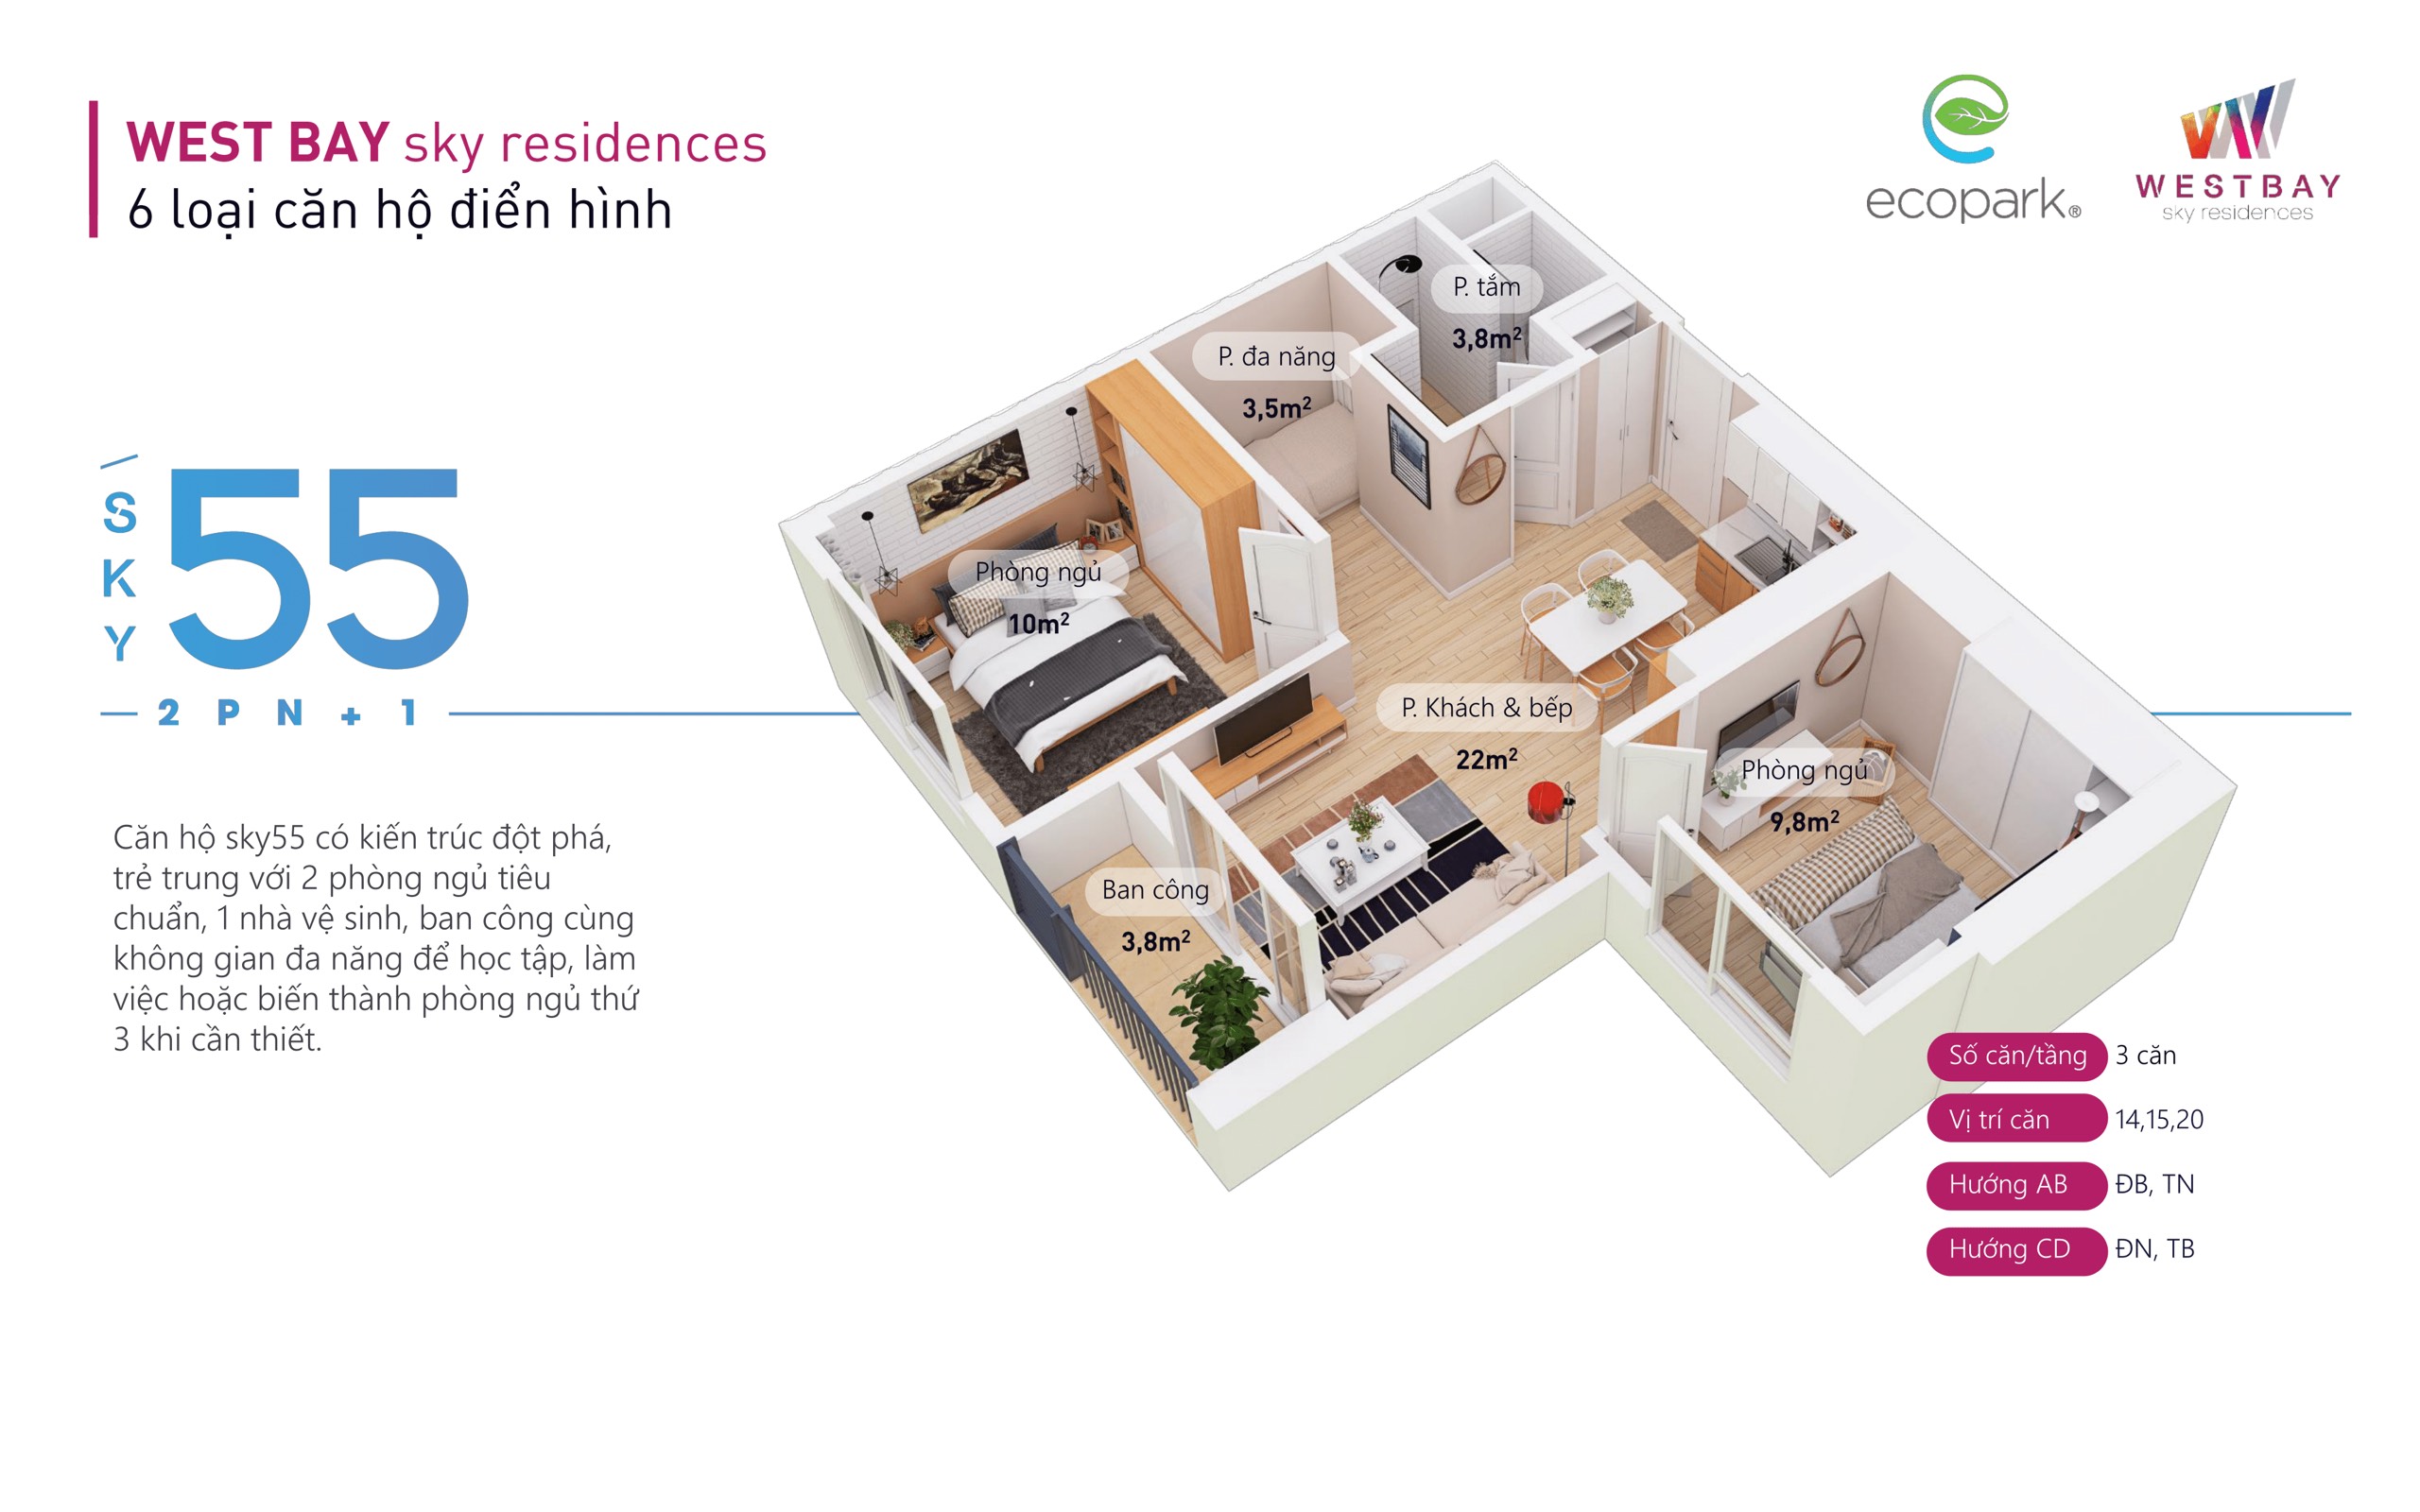 Cho thuê căn hộ 55 m2 - Westbay Ecoaprk - 6 triệu